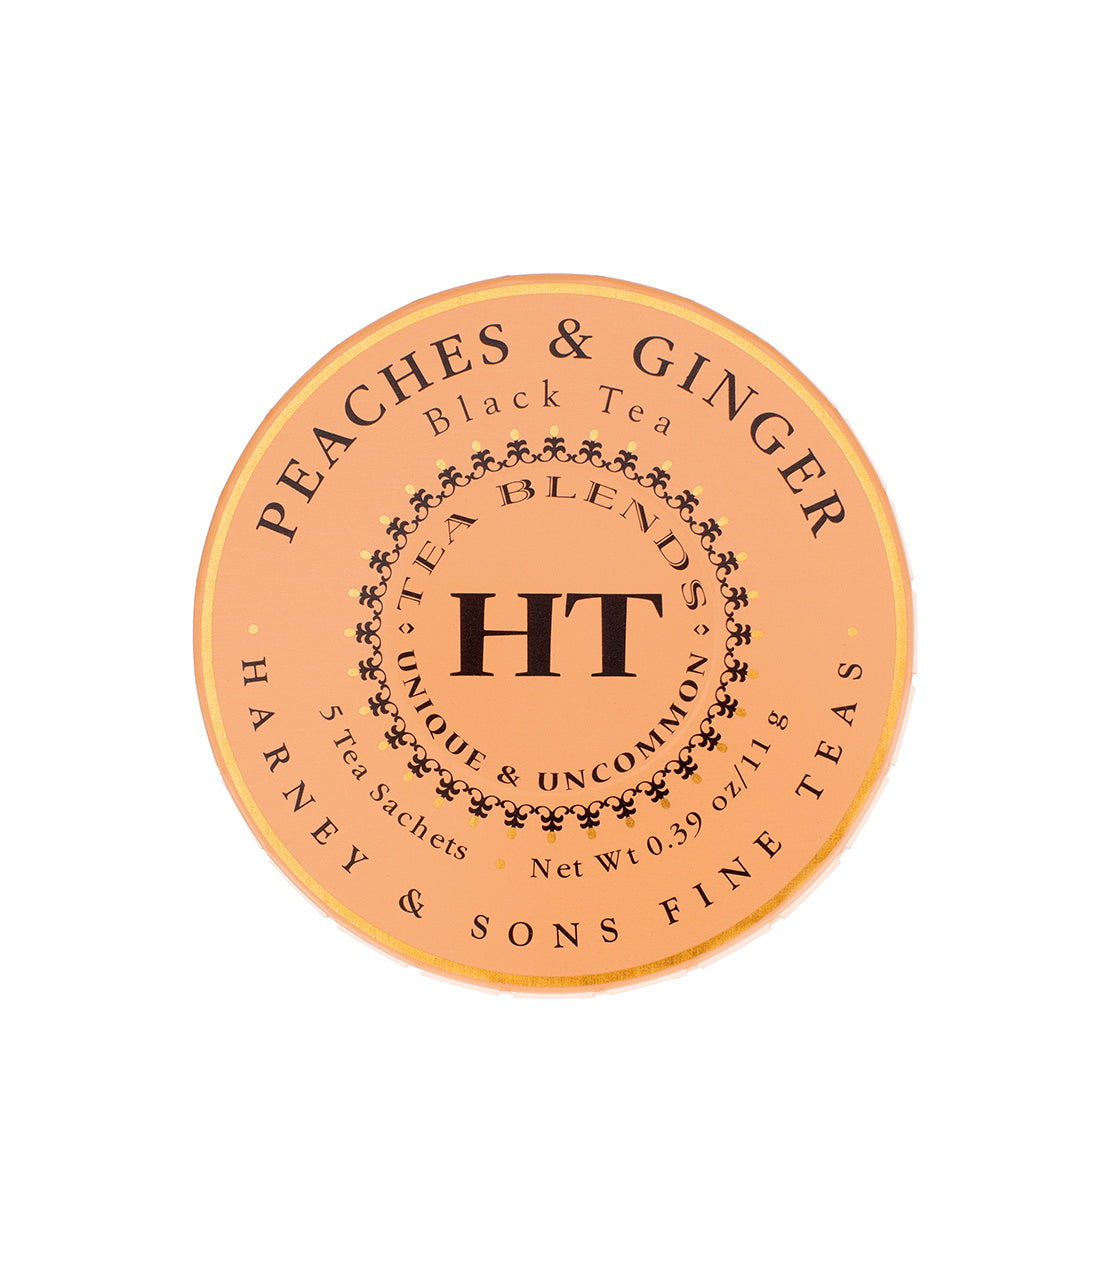 Peaches & Ginger - Sachets Tagalong Tin of 5 Sachets - Harney & Sons Fine Teas